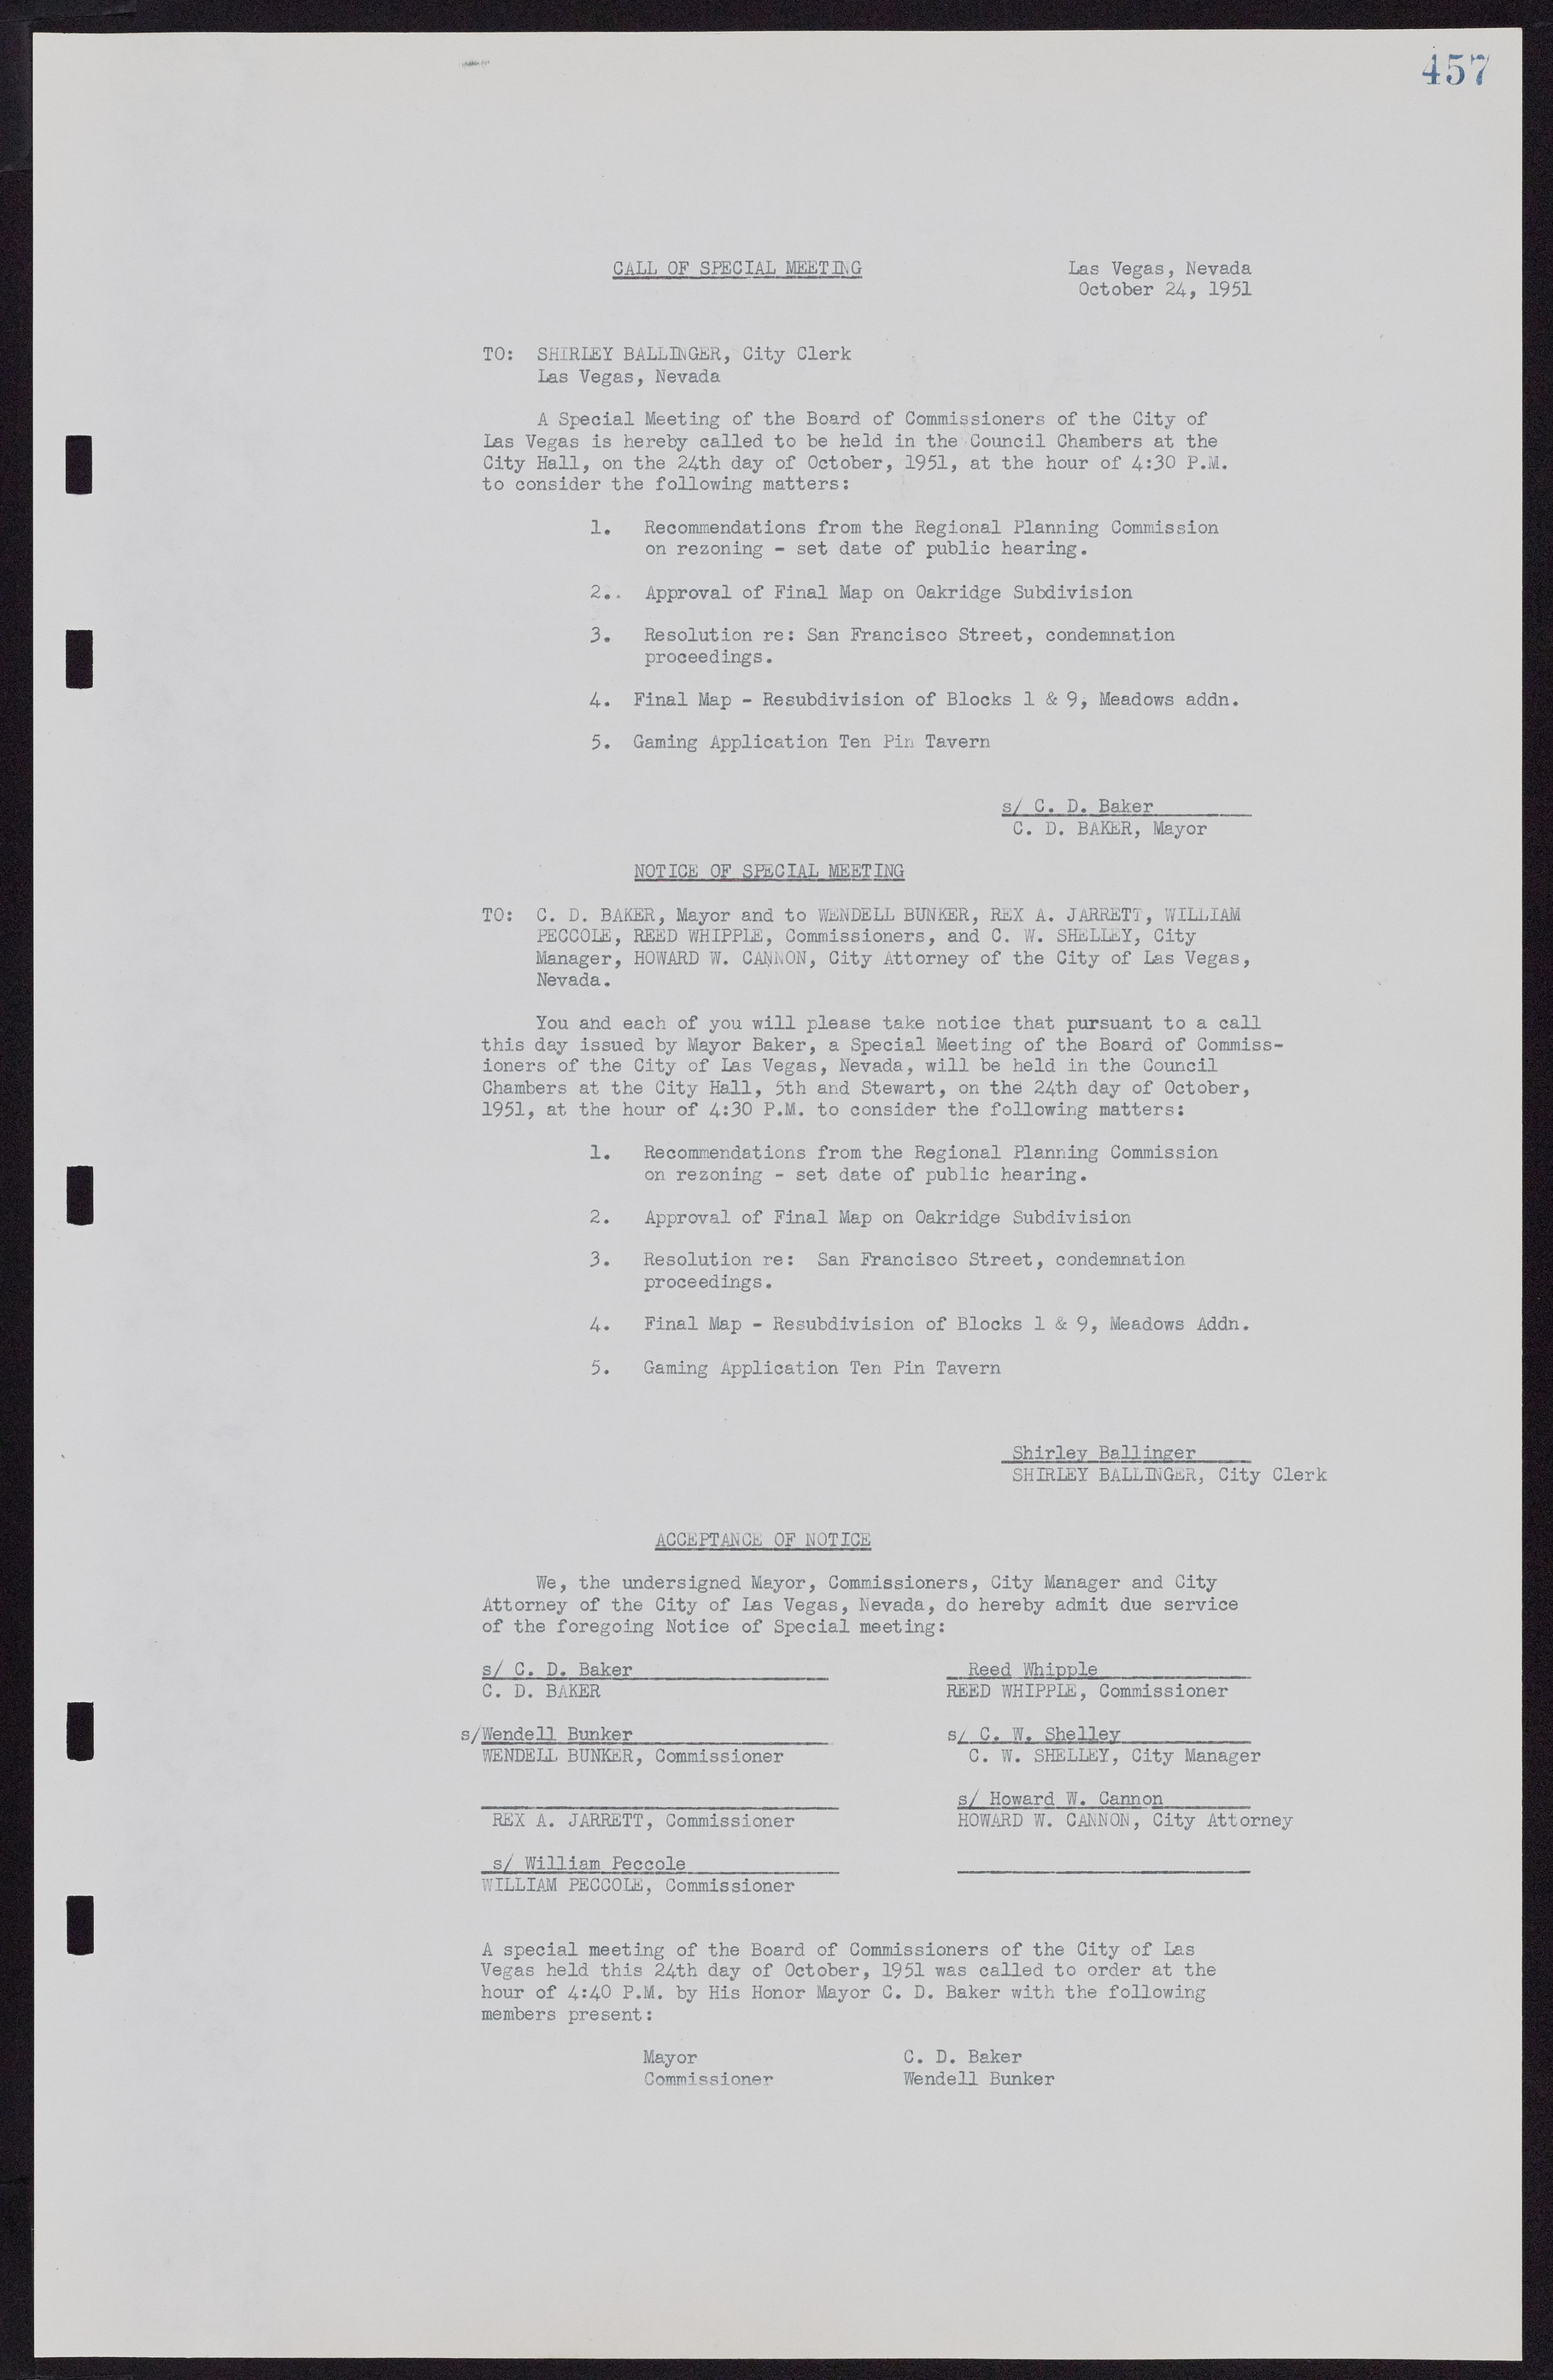 Las Vegas City Commission Minutes, November 7, 1949 to May 21, 1952, lvc000007-473